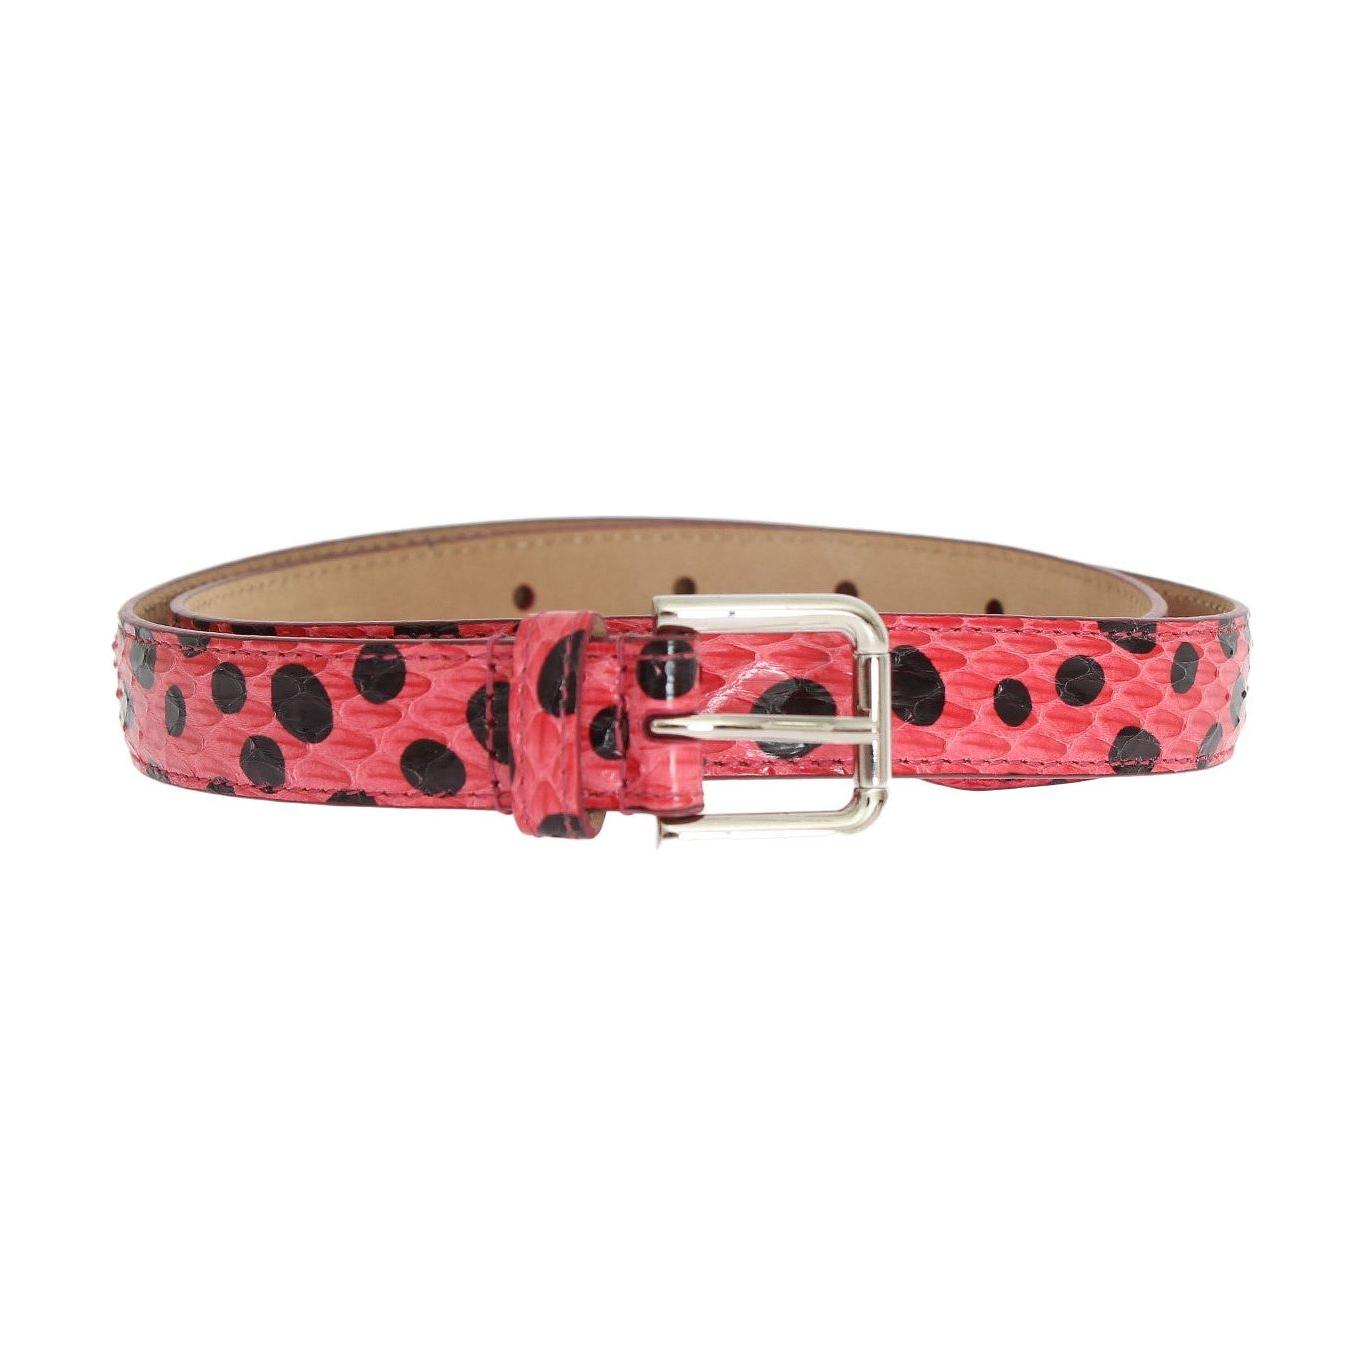 Dolce & Gabbana Polka Dot Snakeskin Belt with Silver Buckle Belt pink-polka-snakeskin-silver-buckle-belt 472628-pink-polka-snakeskin-silver-buckle-belt.jpg